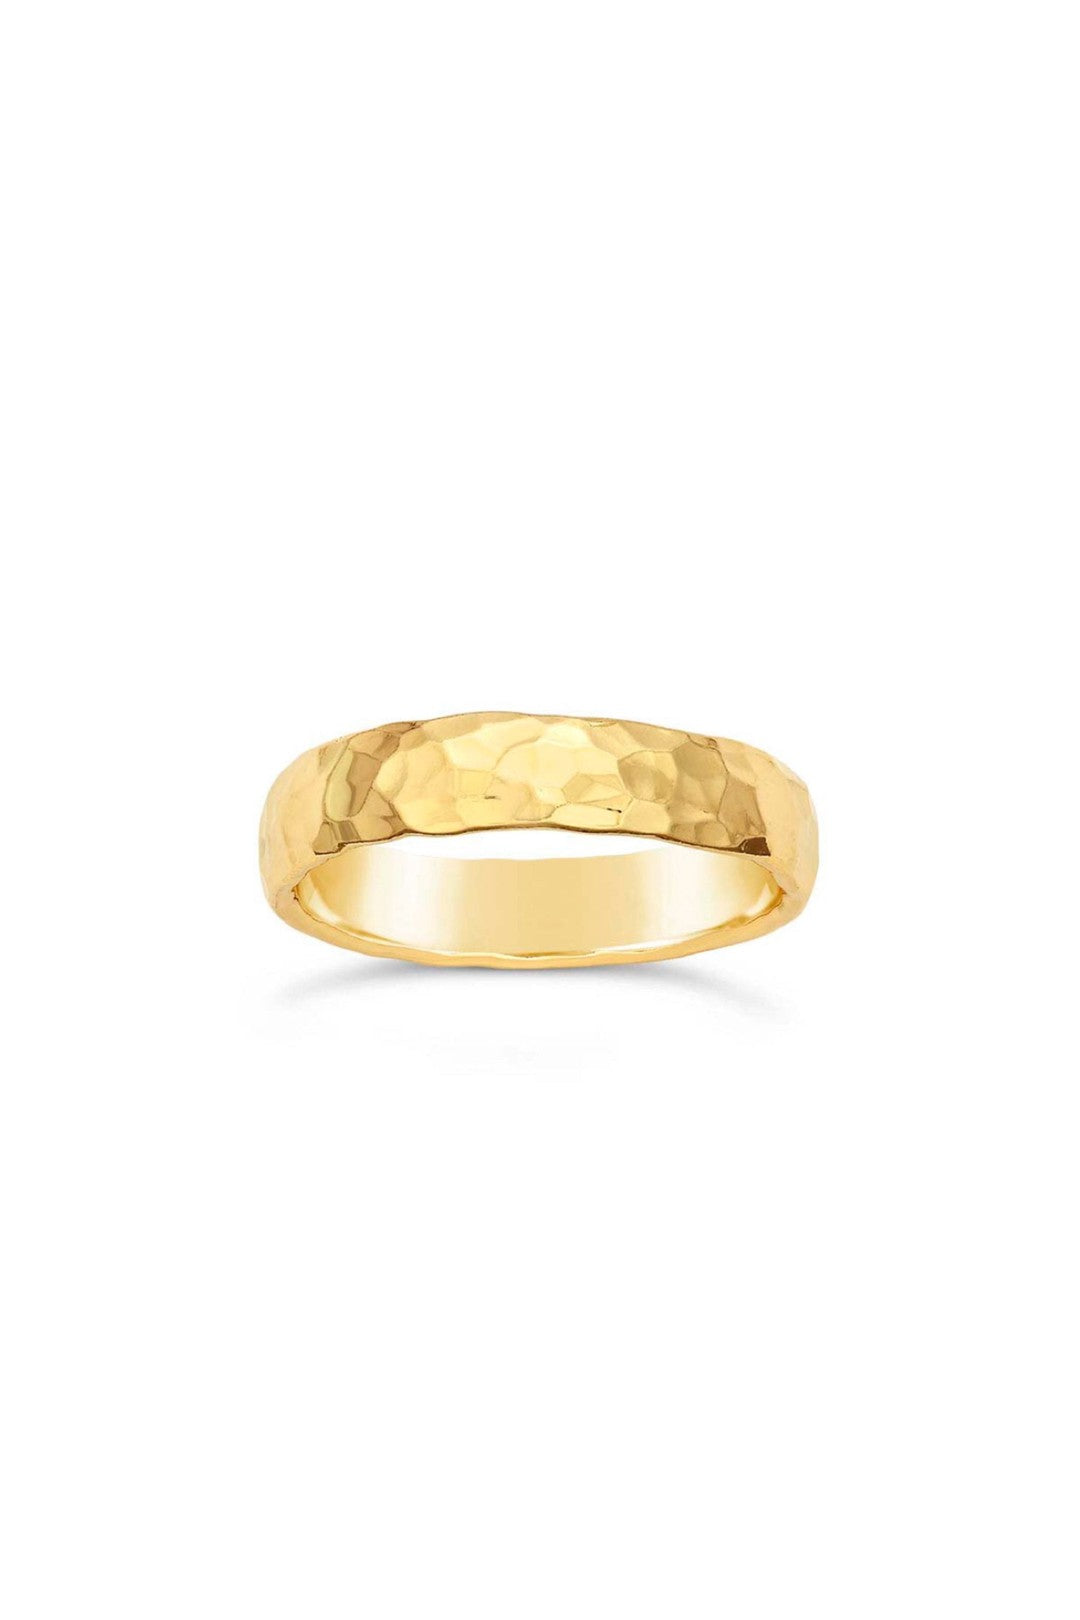 Glimmer ring, gold